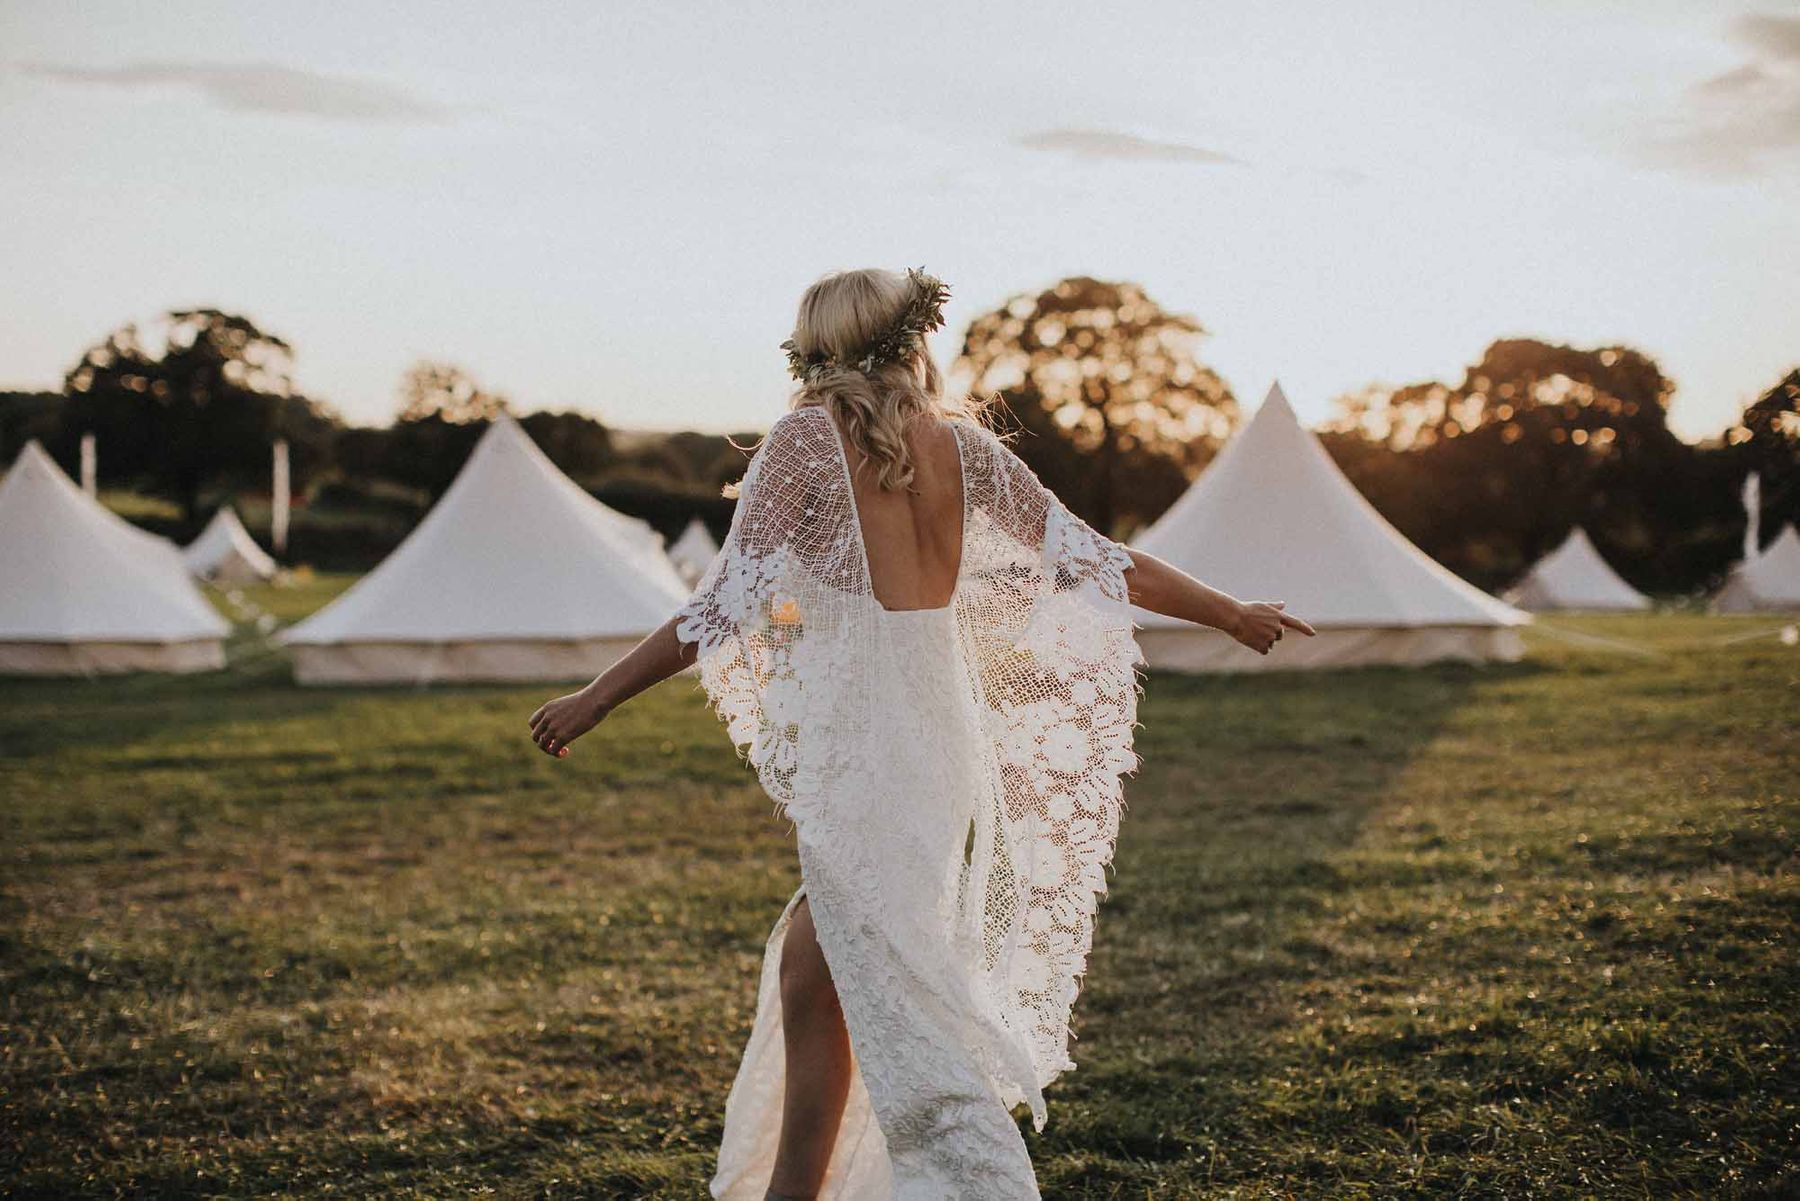 Festival Inspired Wedding With Outdoor Ceremony Images Matt Horan